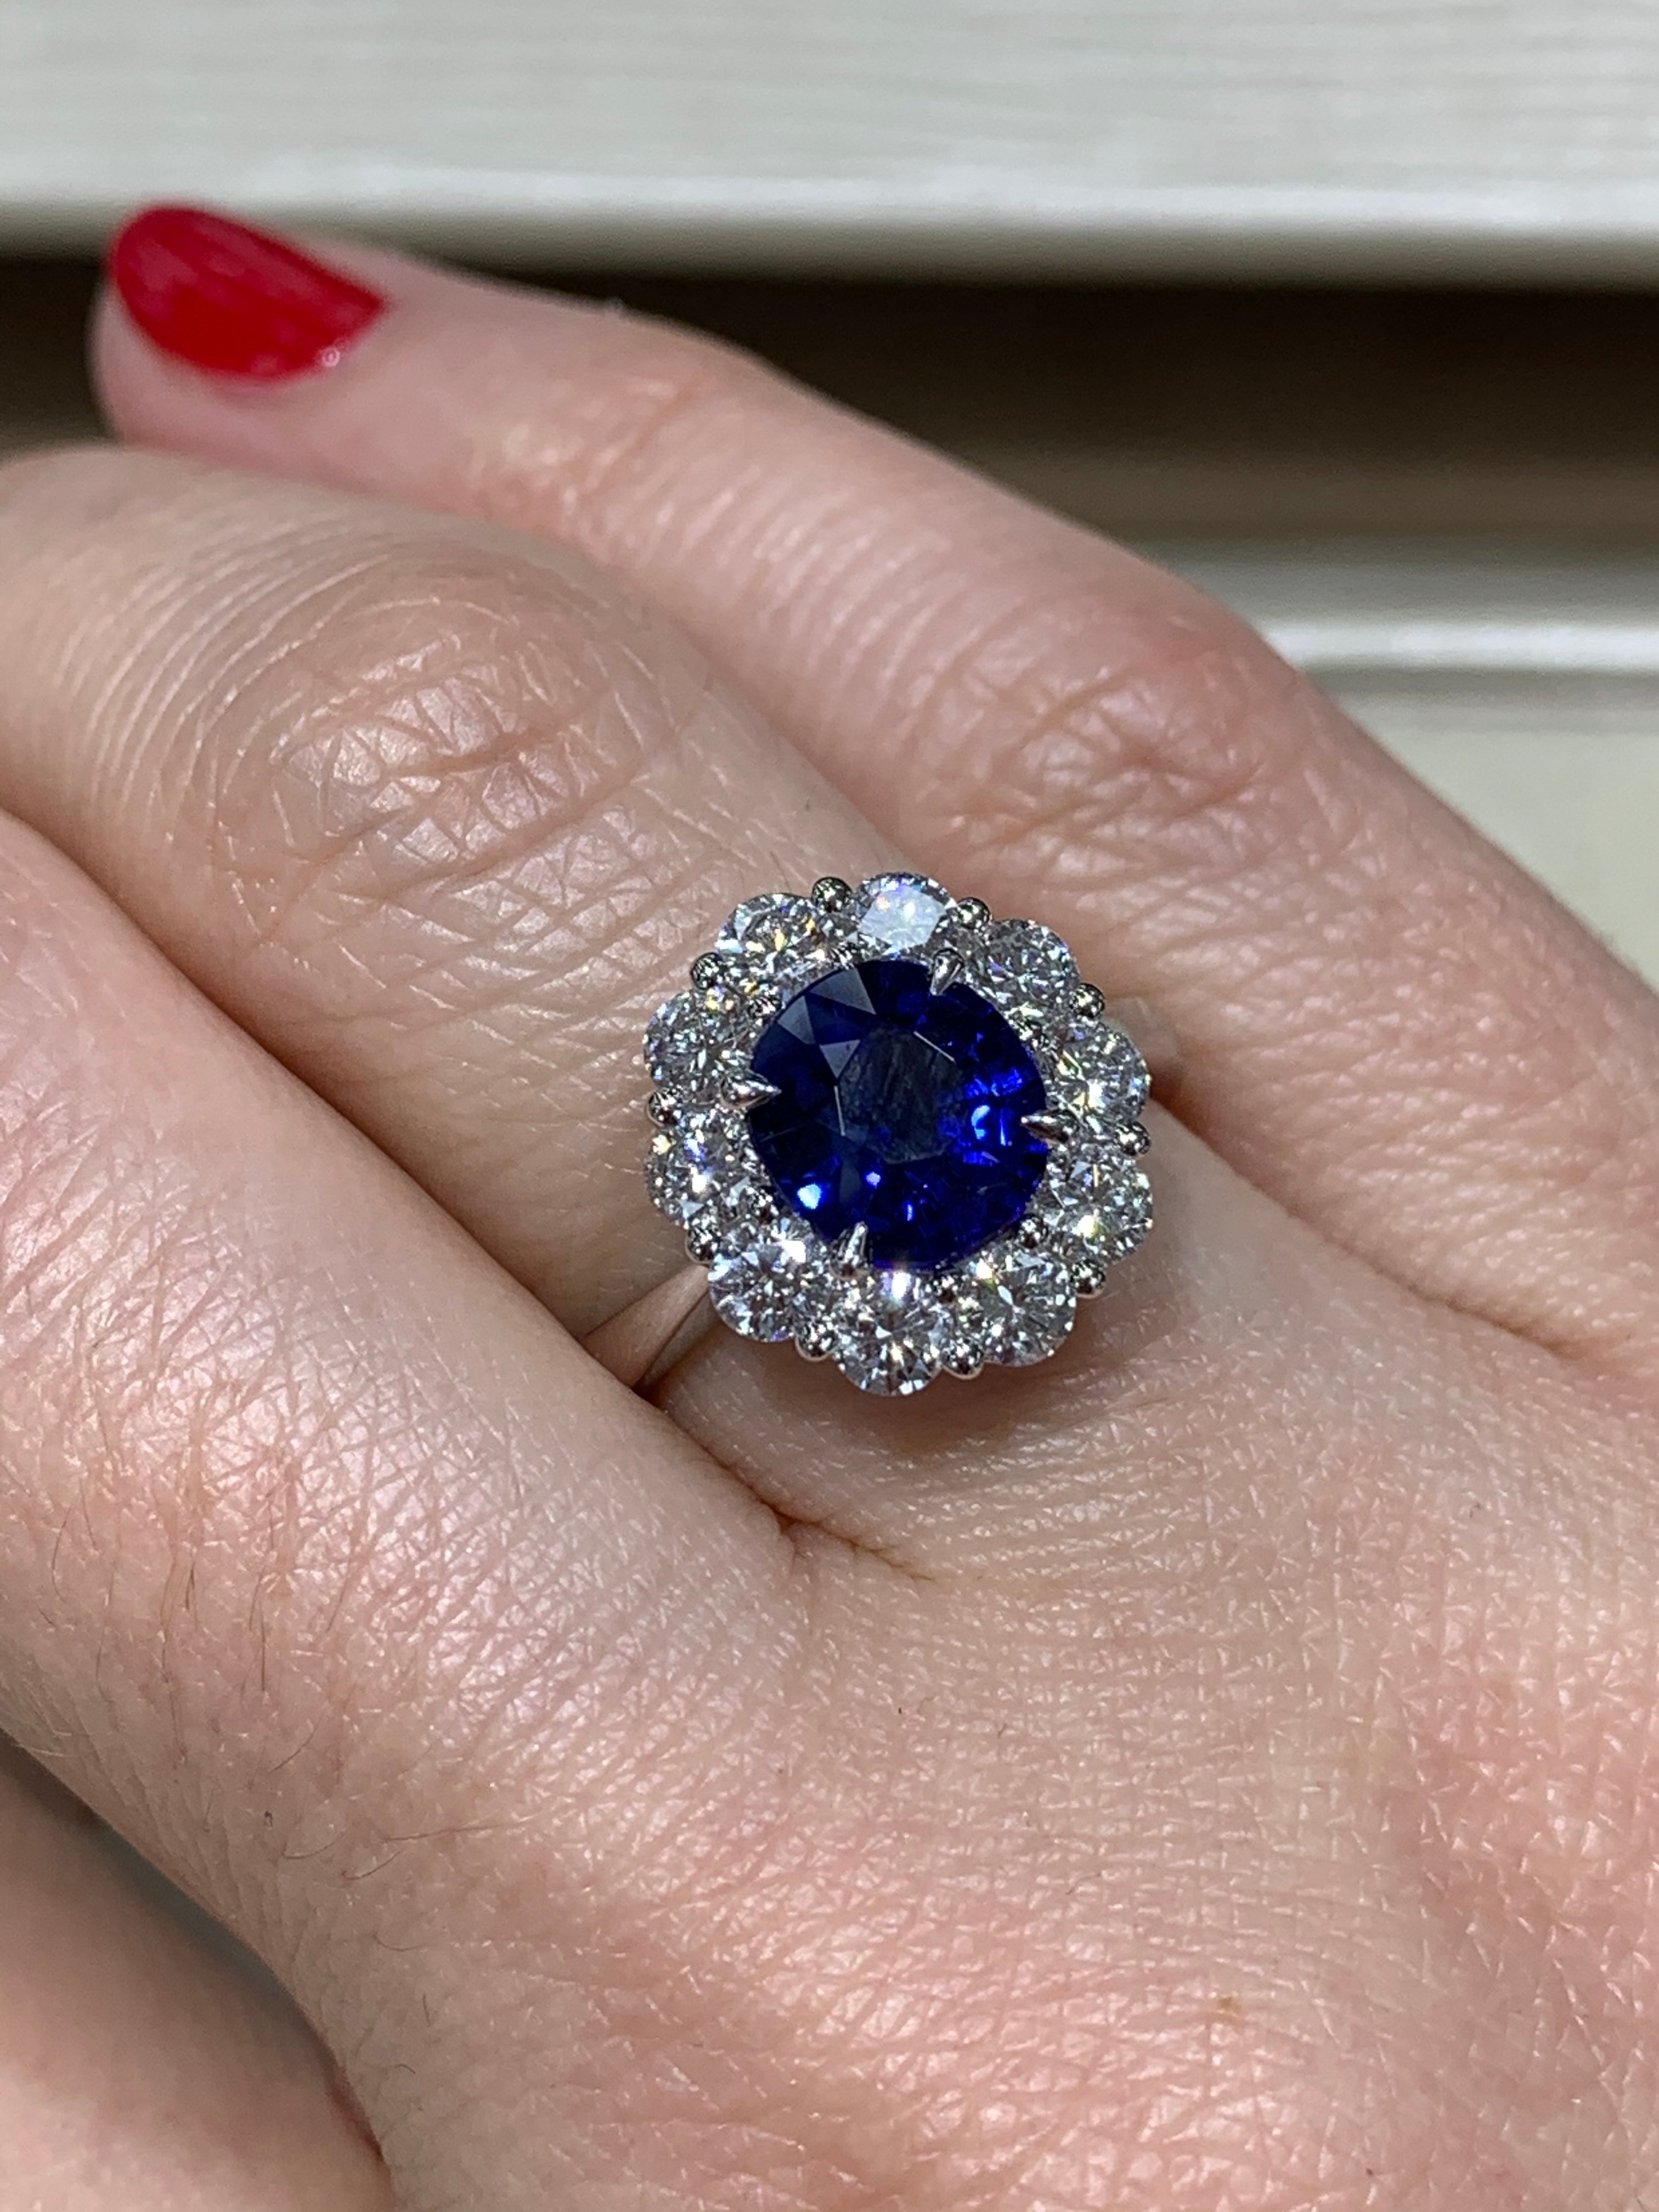 2.22ct Royal Blue Sapphire & Diamond  Ring - HANIKEN JEWELERS NEW-YORK